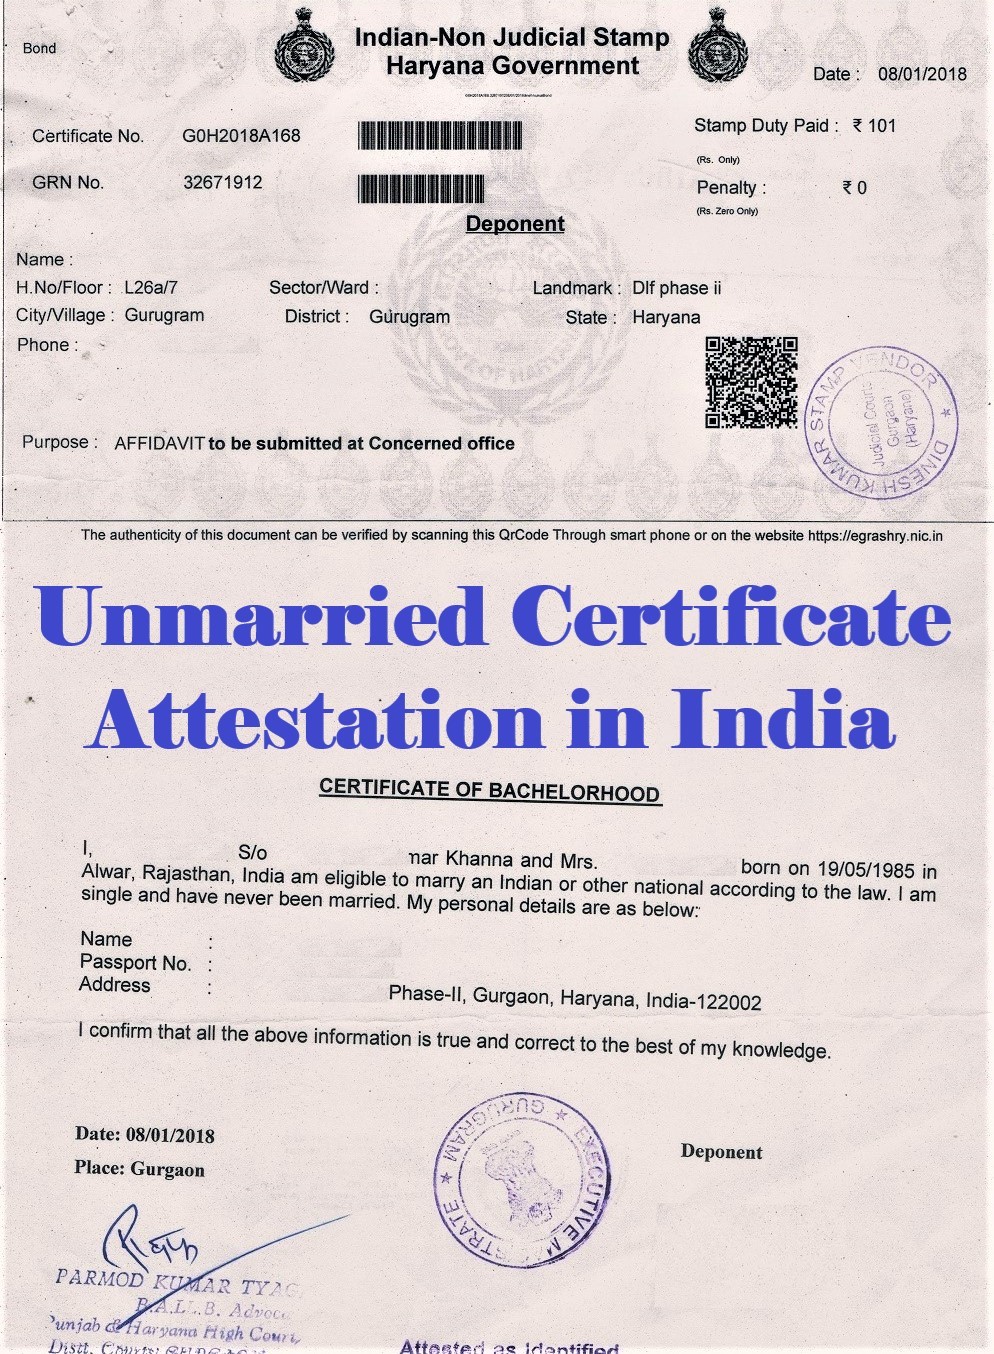 Unmarried Certificate Attestation from Uzbekistan Embassy